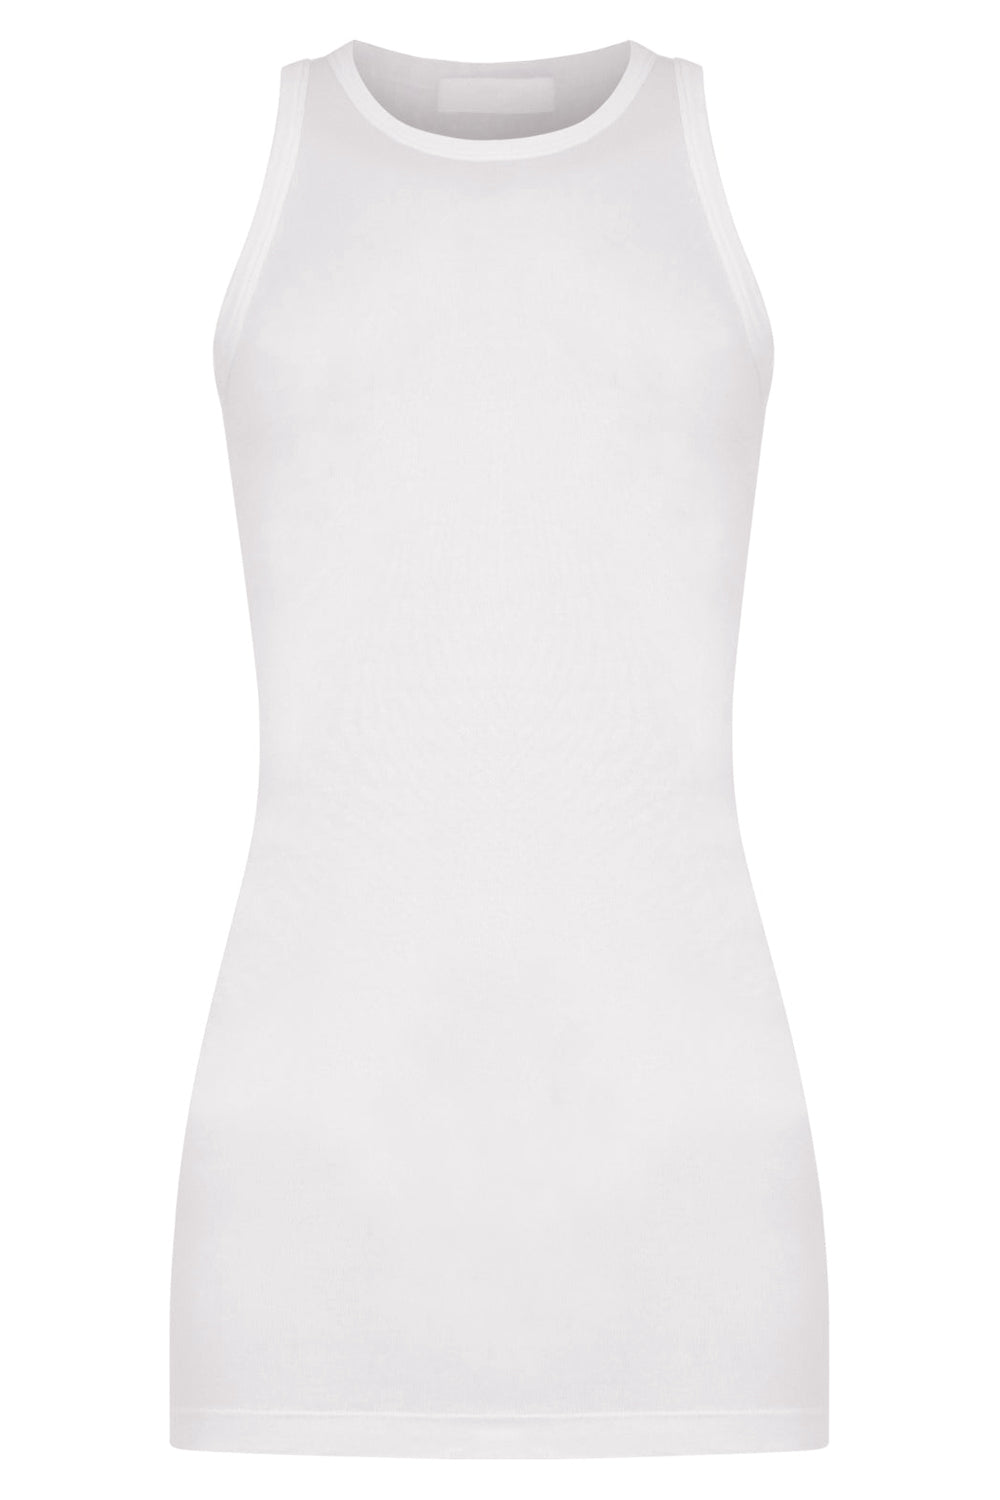 WARDROBE NYC DRESSES RIB TANK MINI DRESS | WHITE